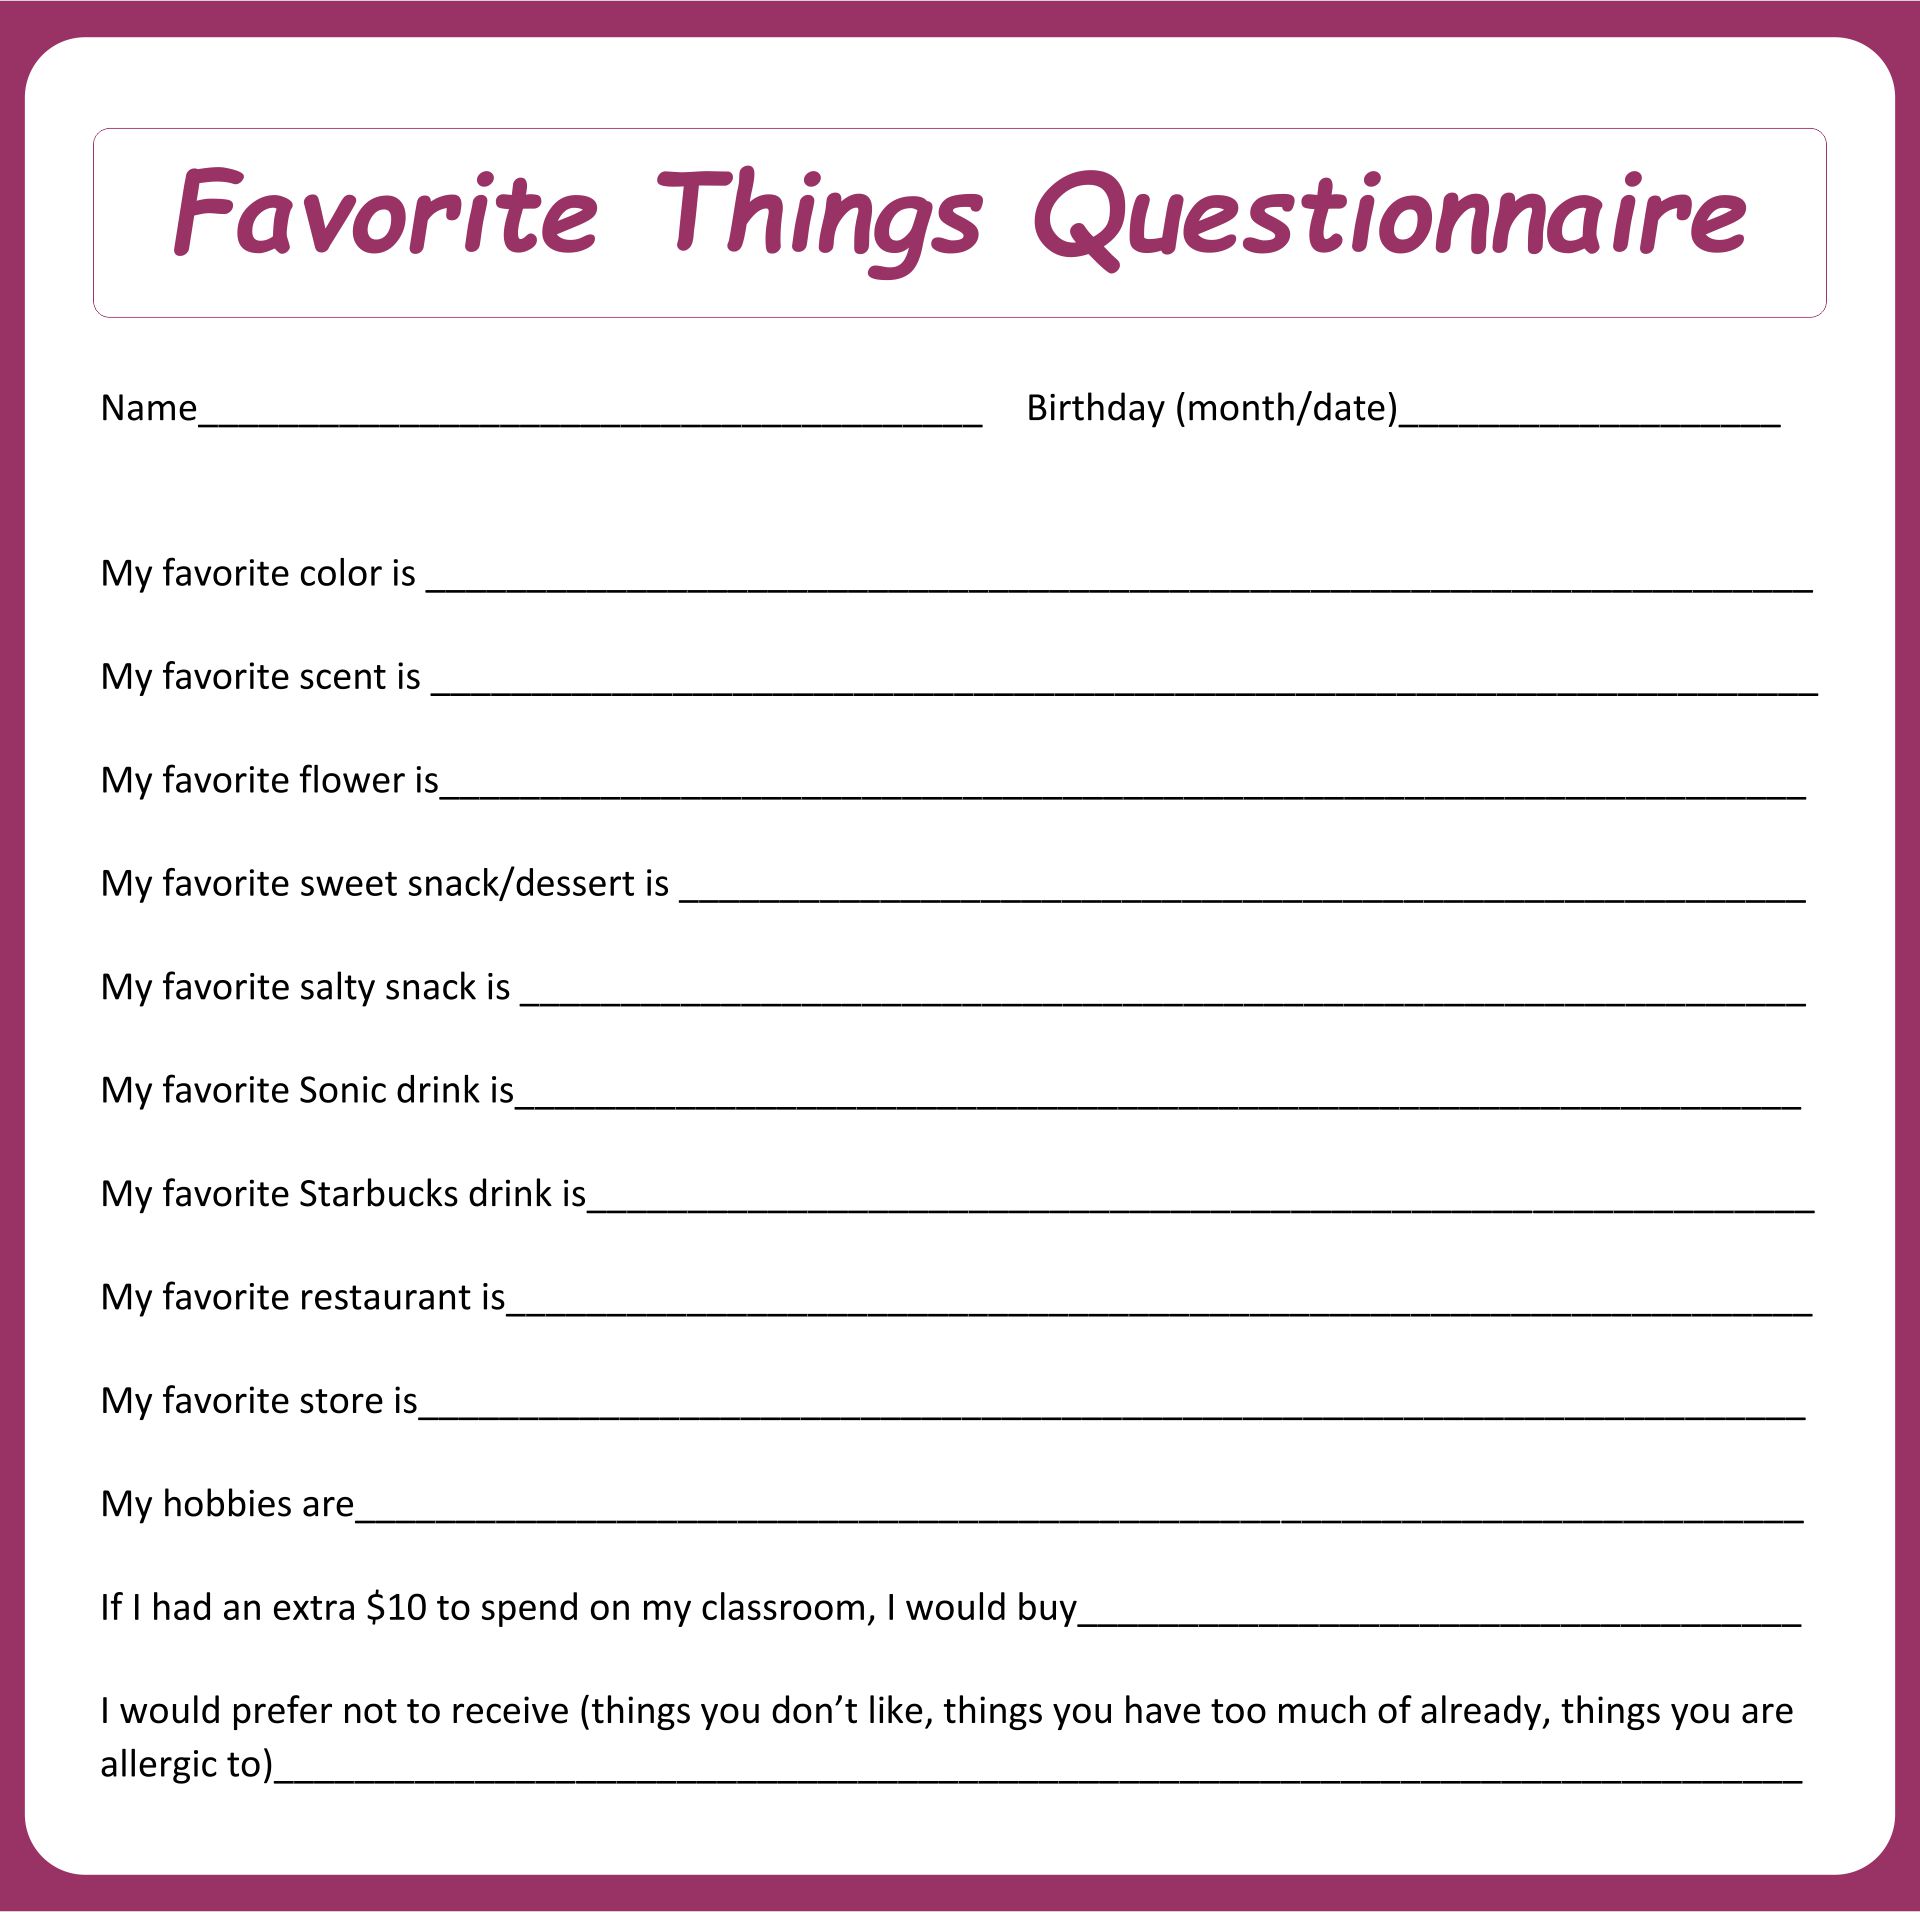 Favorite Things Questionnaire Pdf